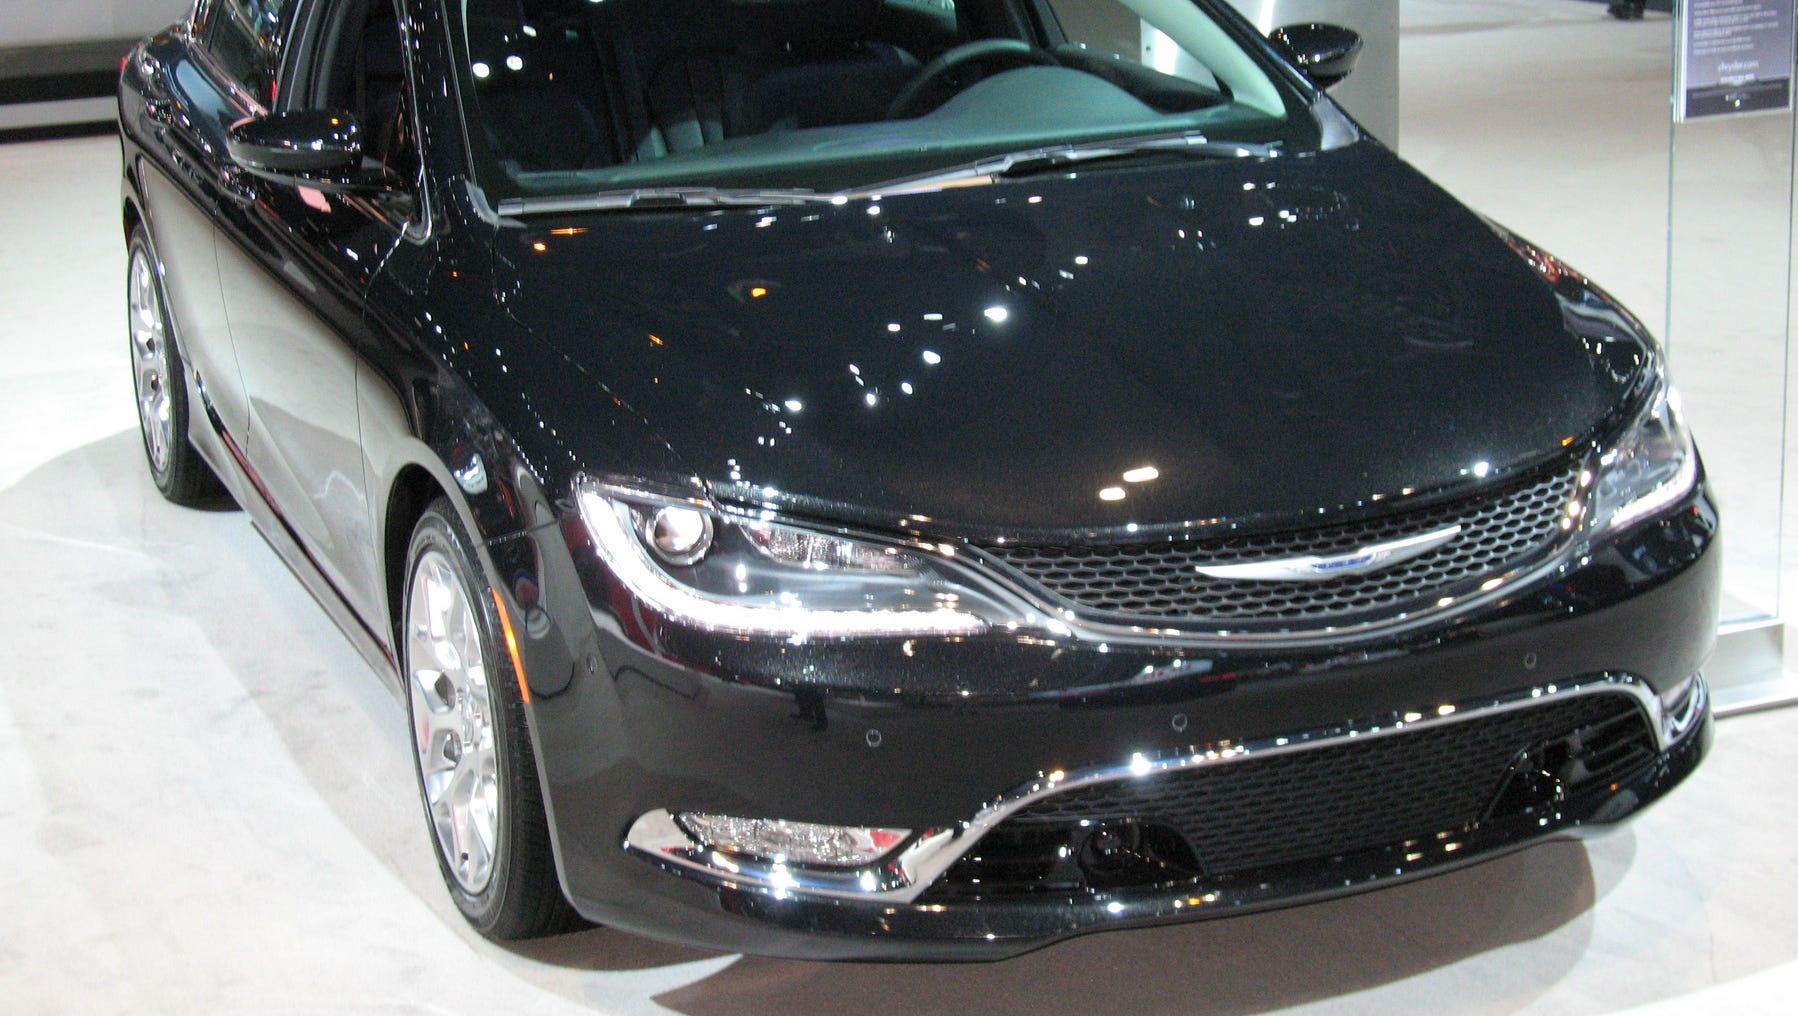 2016 Chrysler 200 is an improved performer